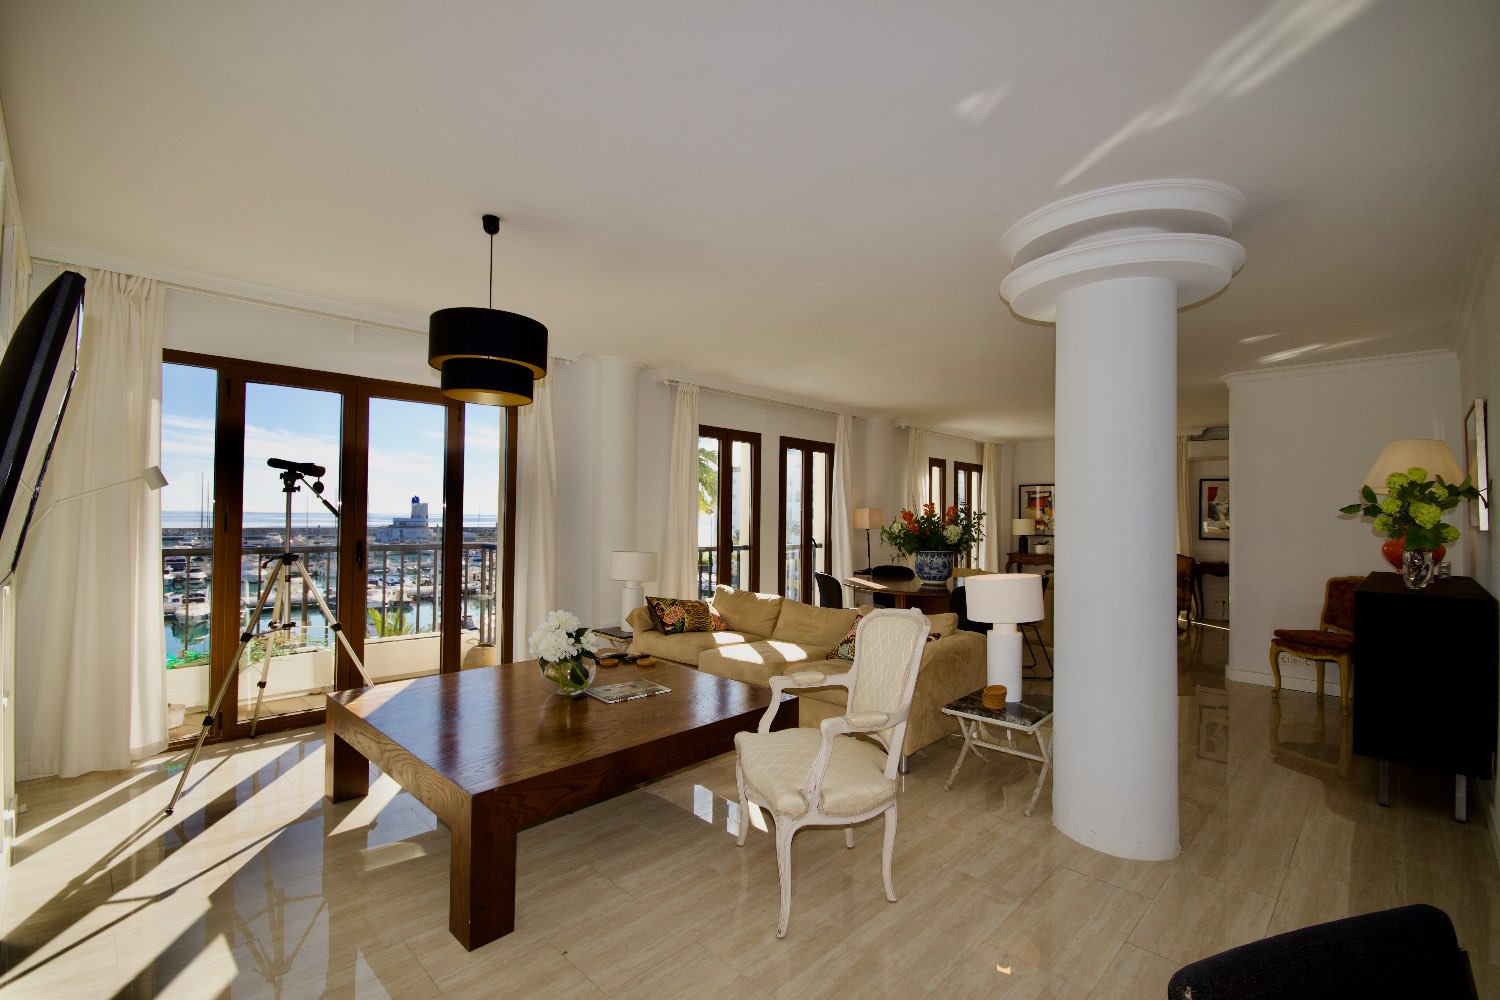 Duplex-Penthouse zum Verkauf in der 1. Linie von Puerto de la Duquesa - Manilva - Málaga - Costa del Sol